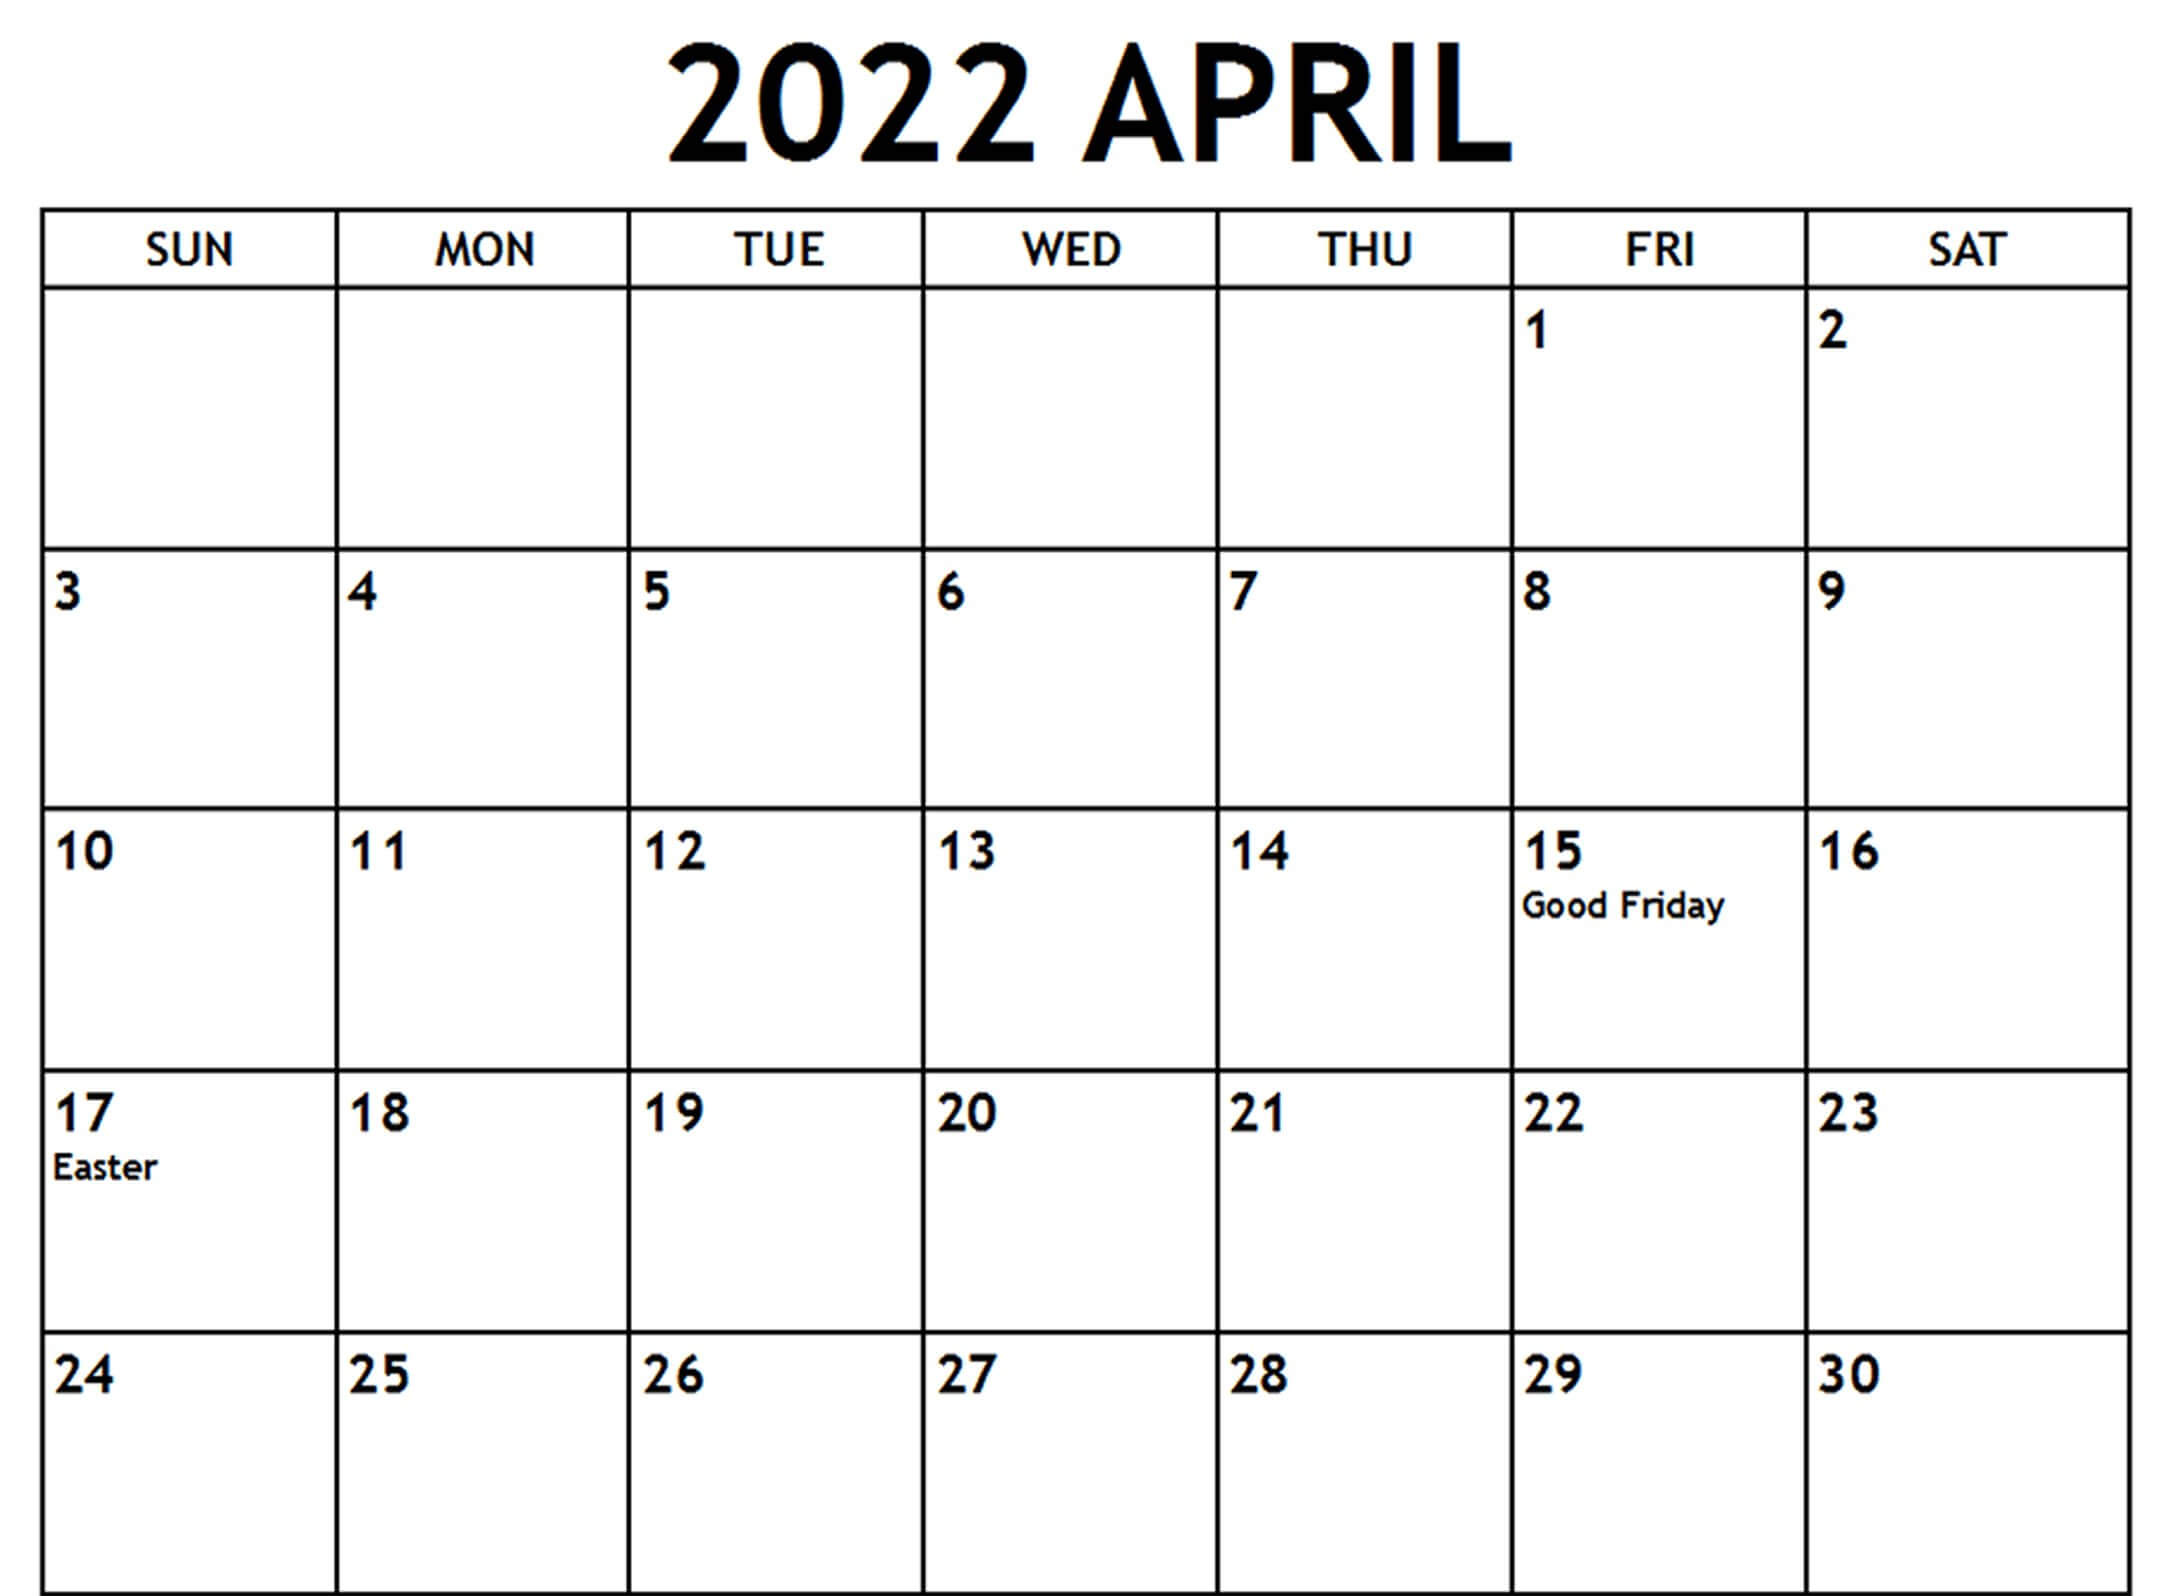 April 2022 Blank Calendar Template